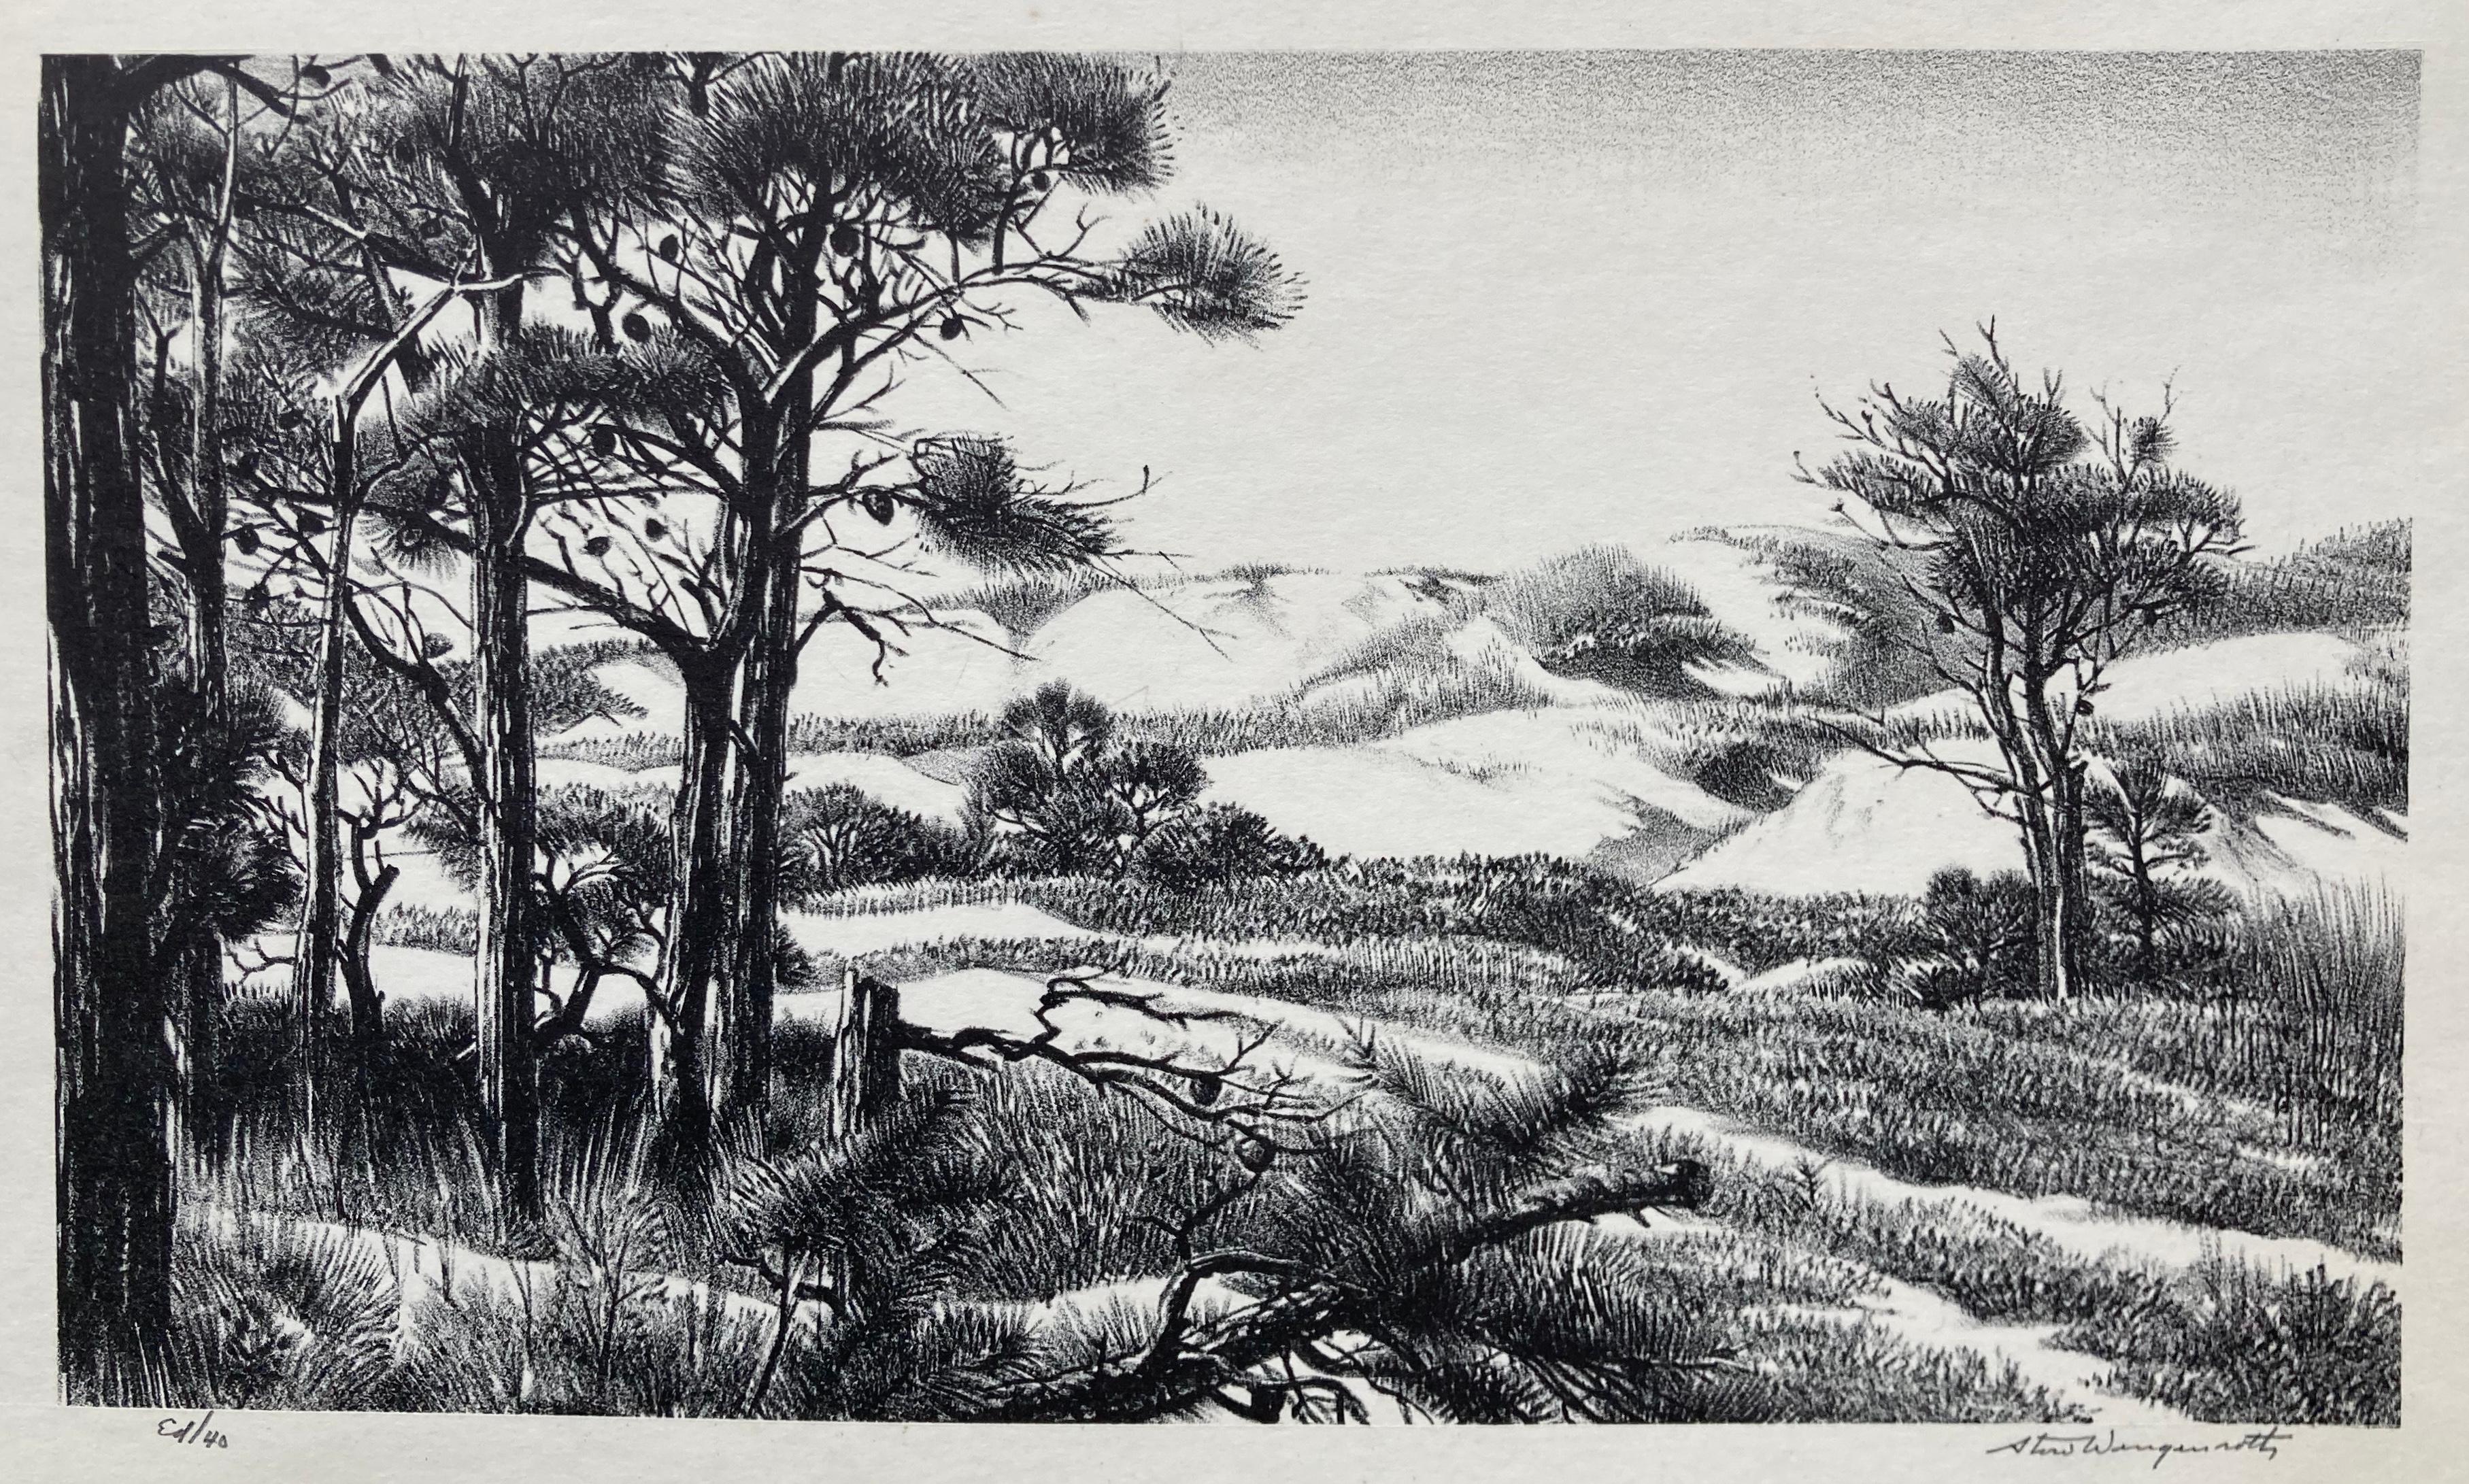 Stow Wengenroth Landscape Print - DUNE ROAD OGUNQUIT, MAINE 